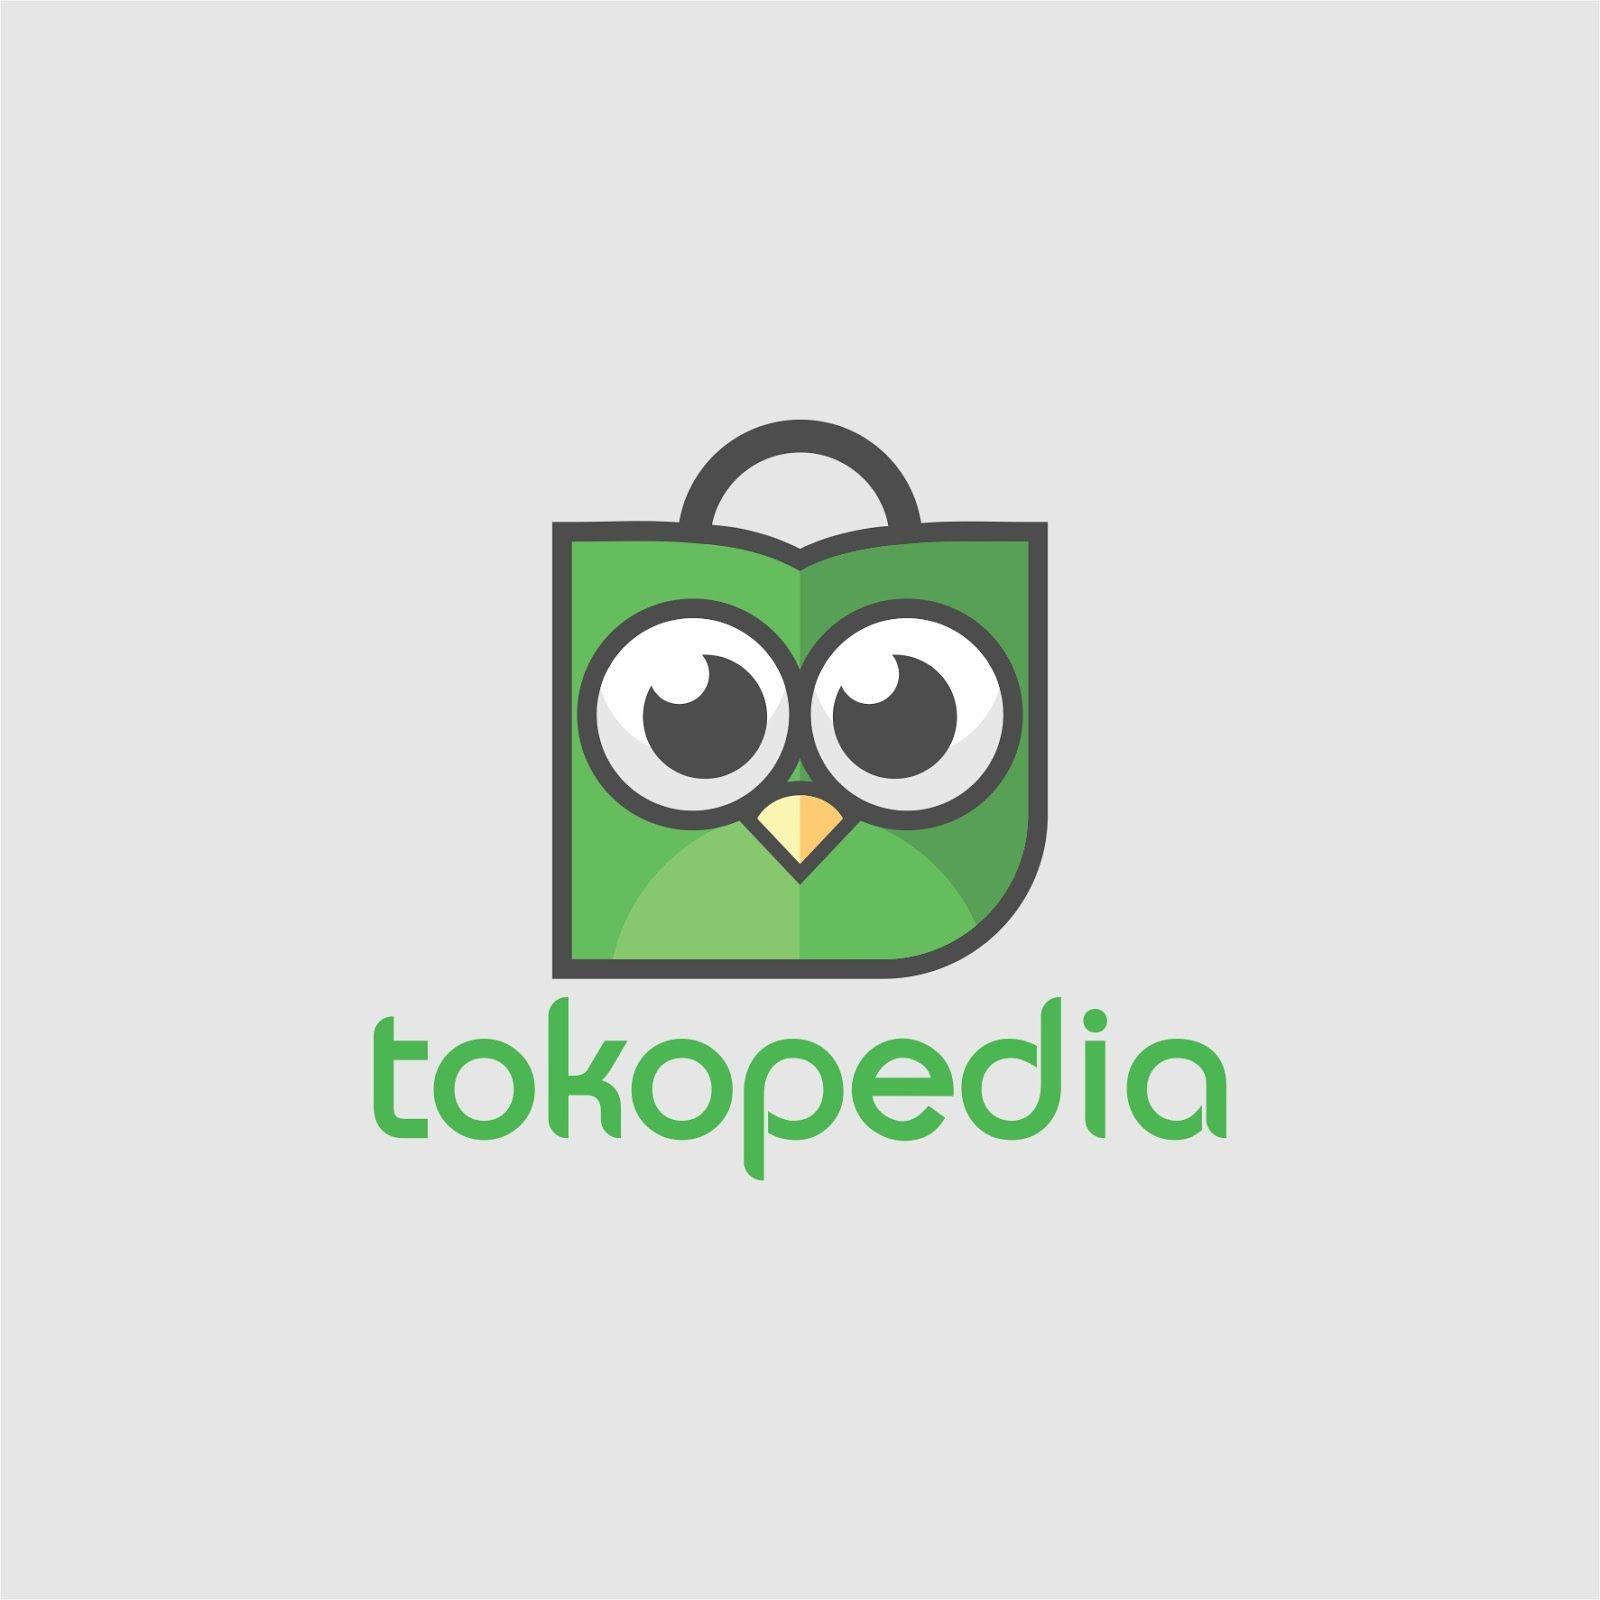 MPAApedia Logo - Download File Vector Logo Tokopedia - High quality file vector ...